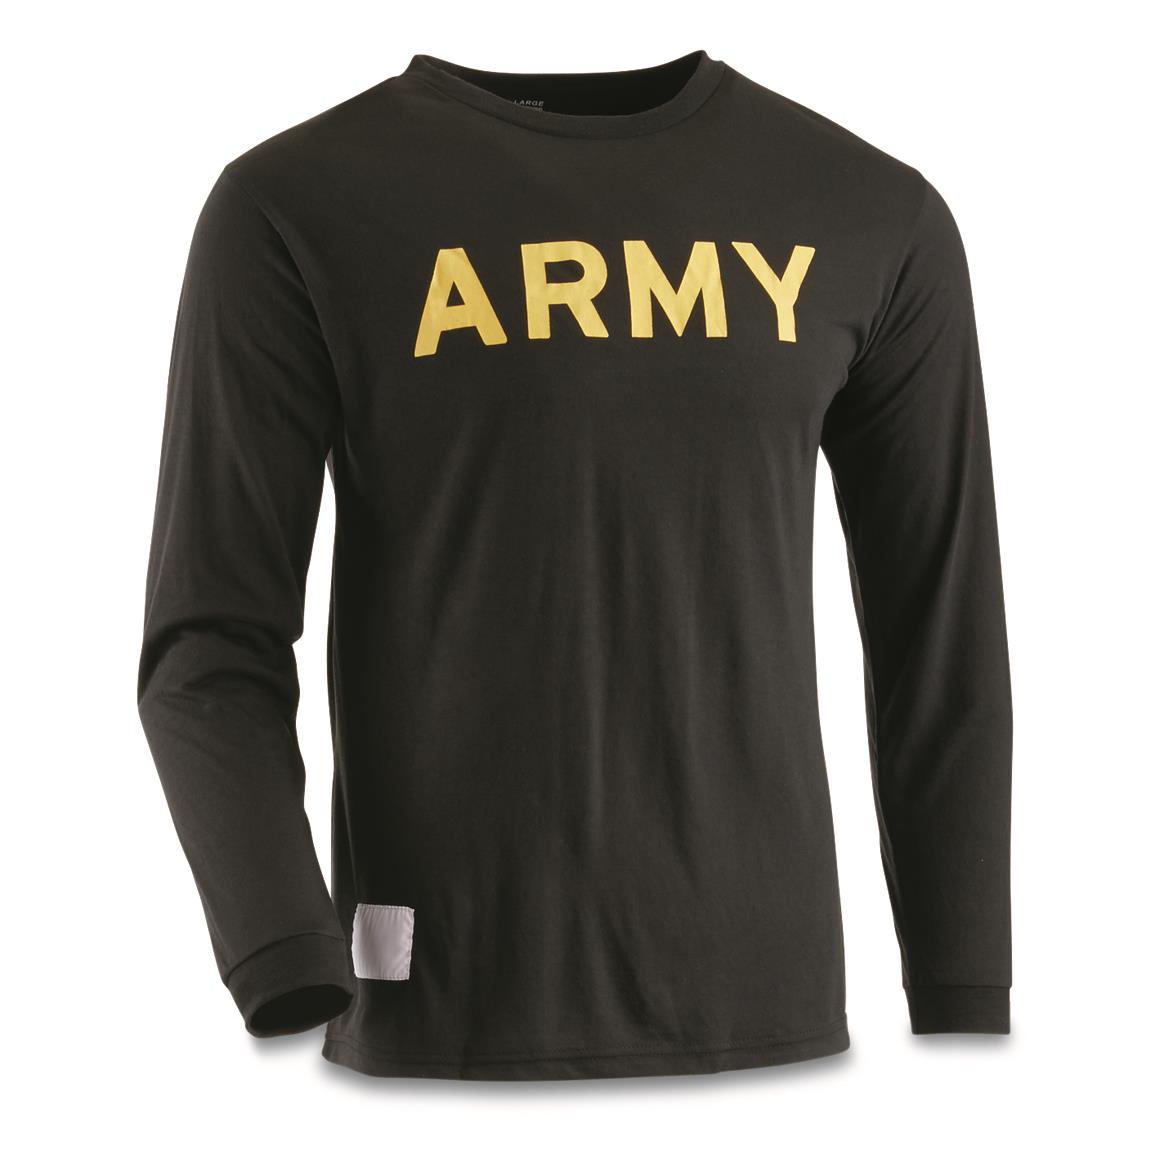 U.S. Army Surplus Long Sleeve PT Shirt, New, Black